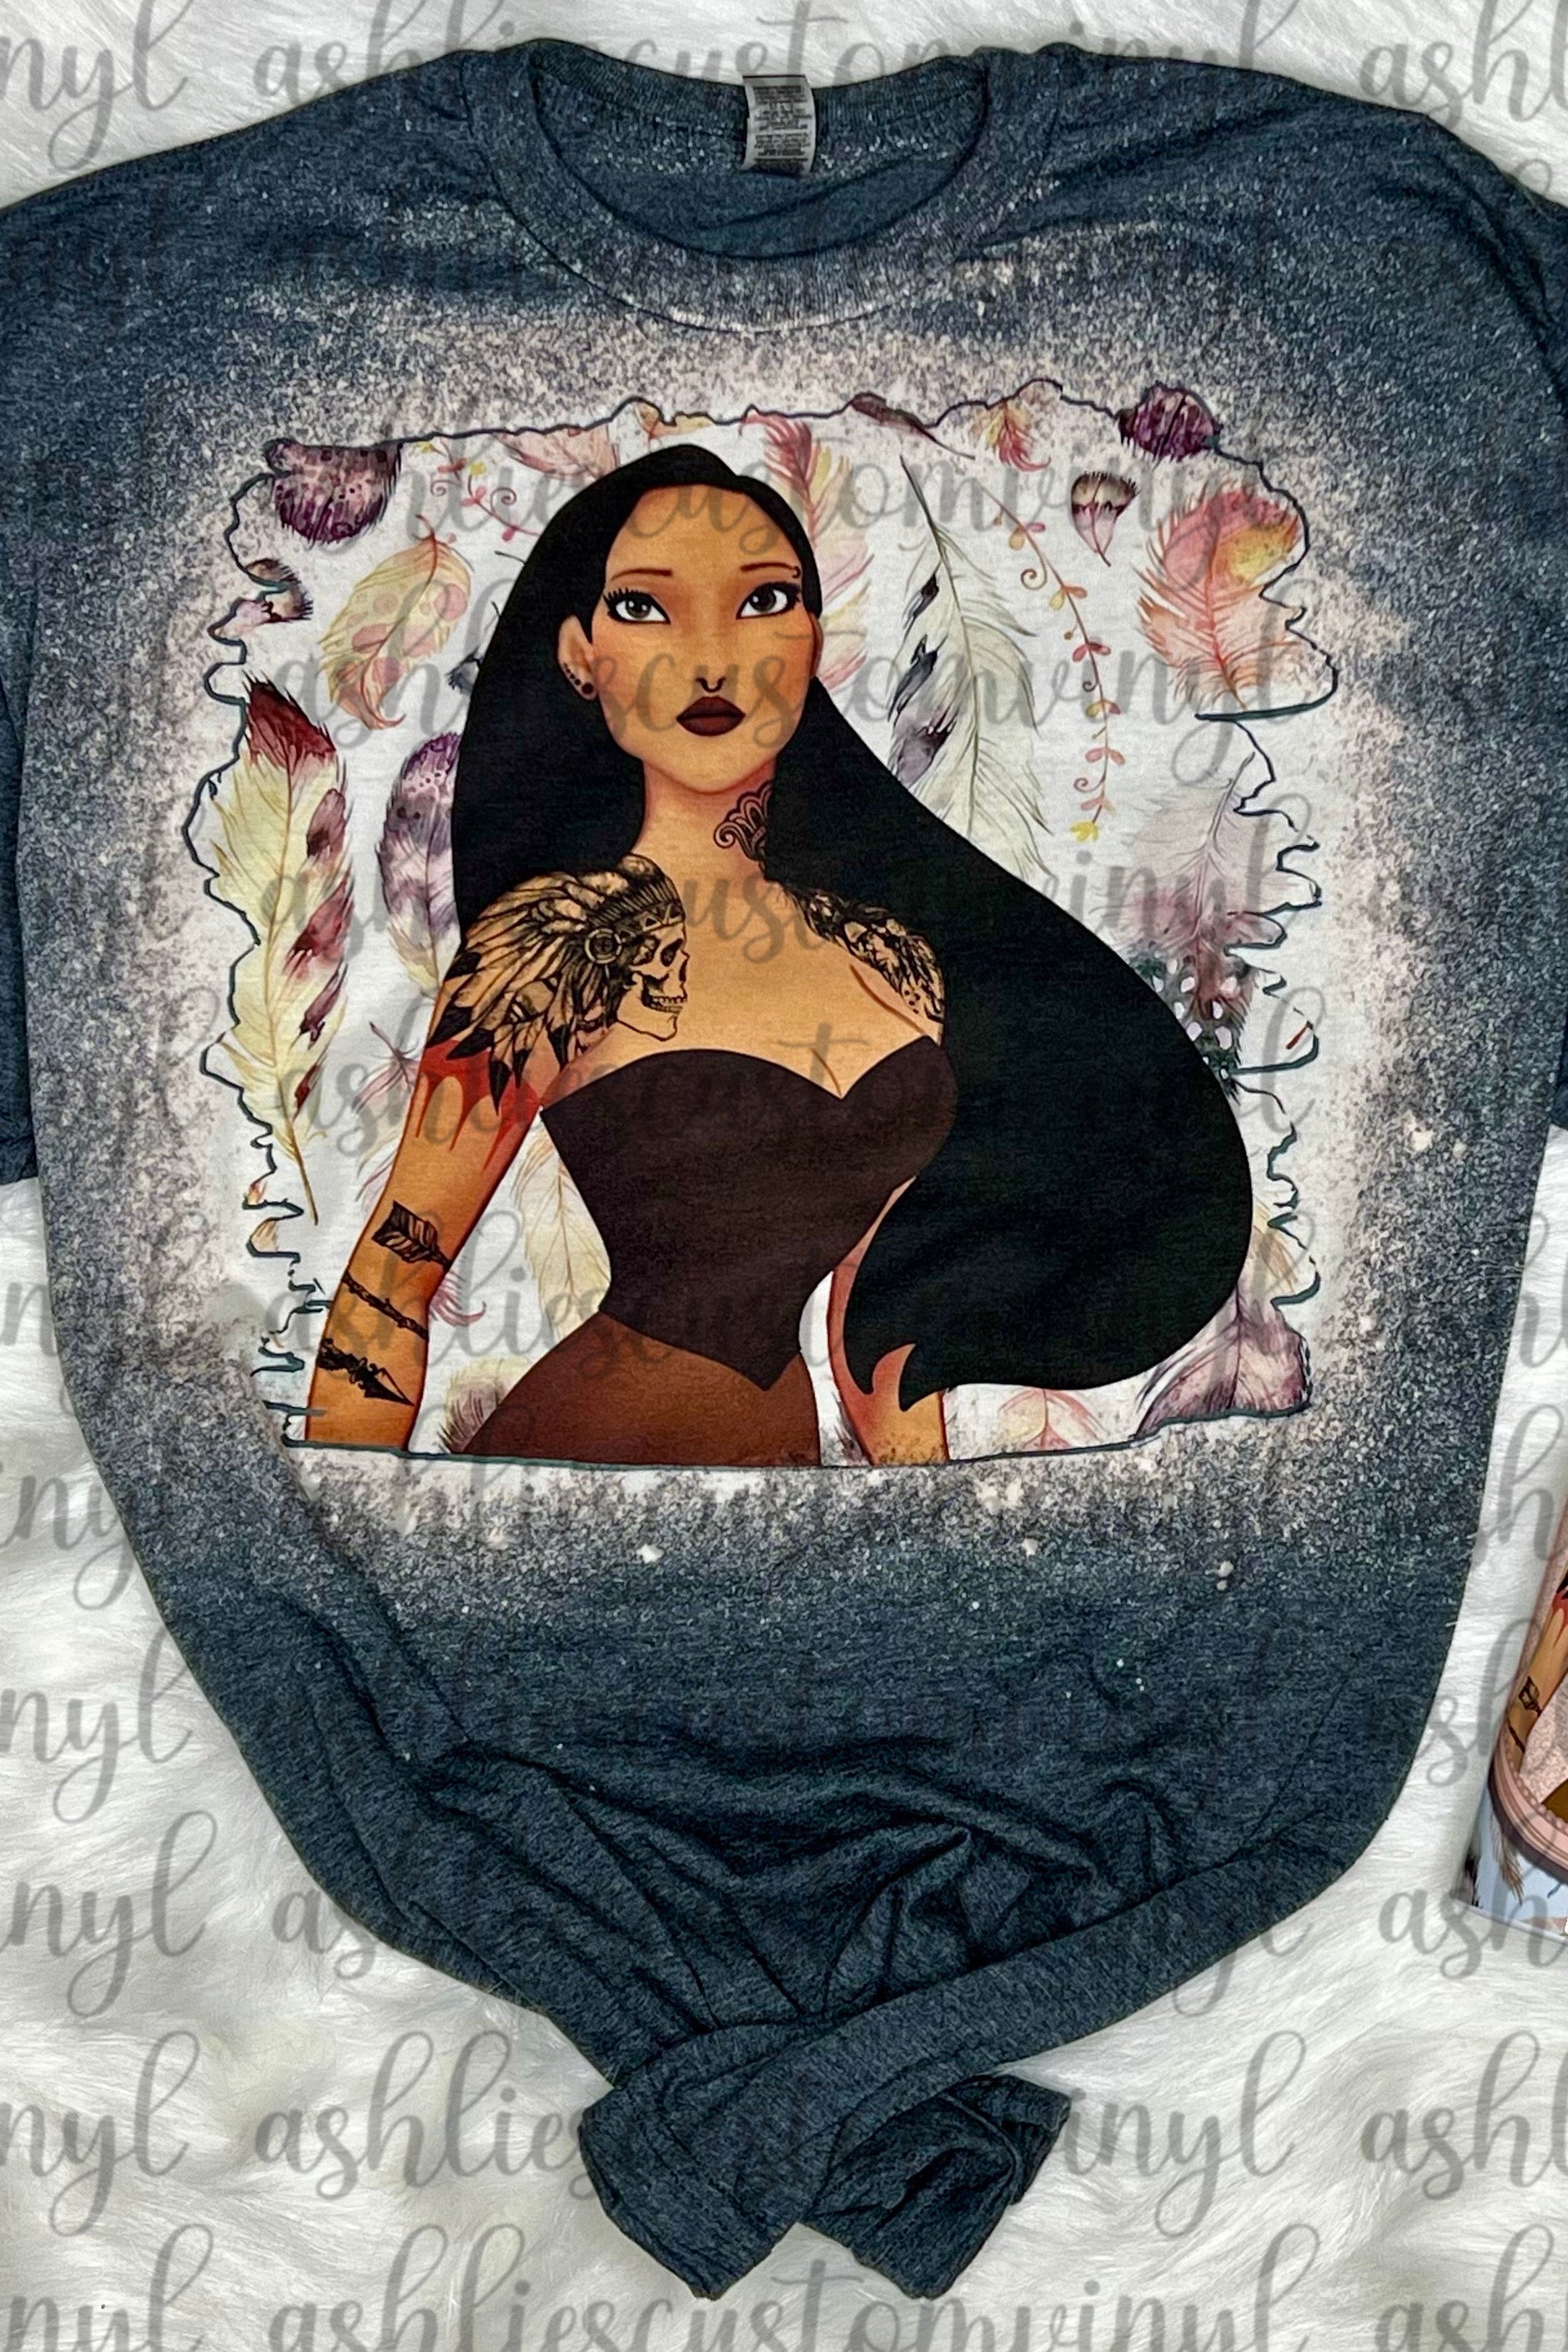 tattooed princess jasmine